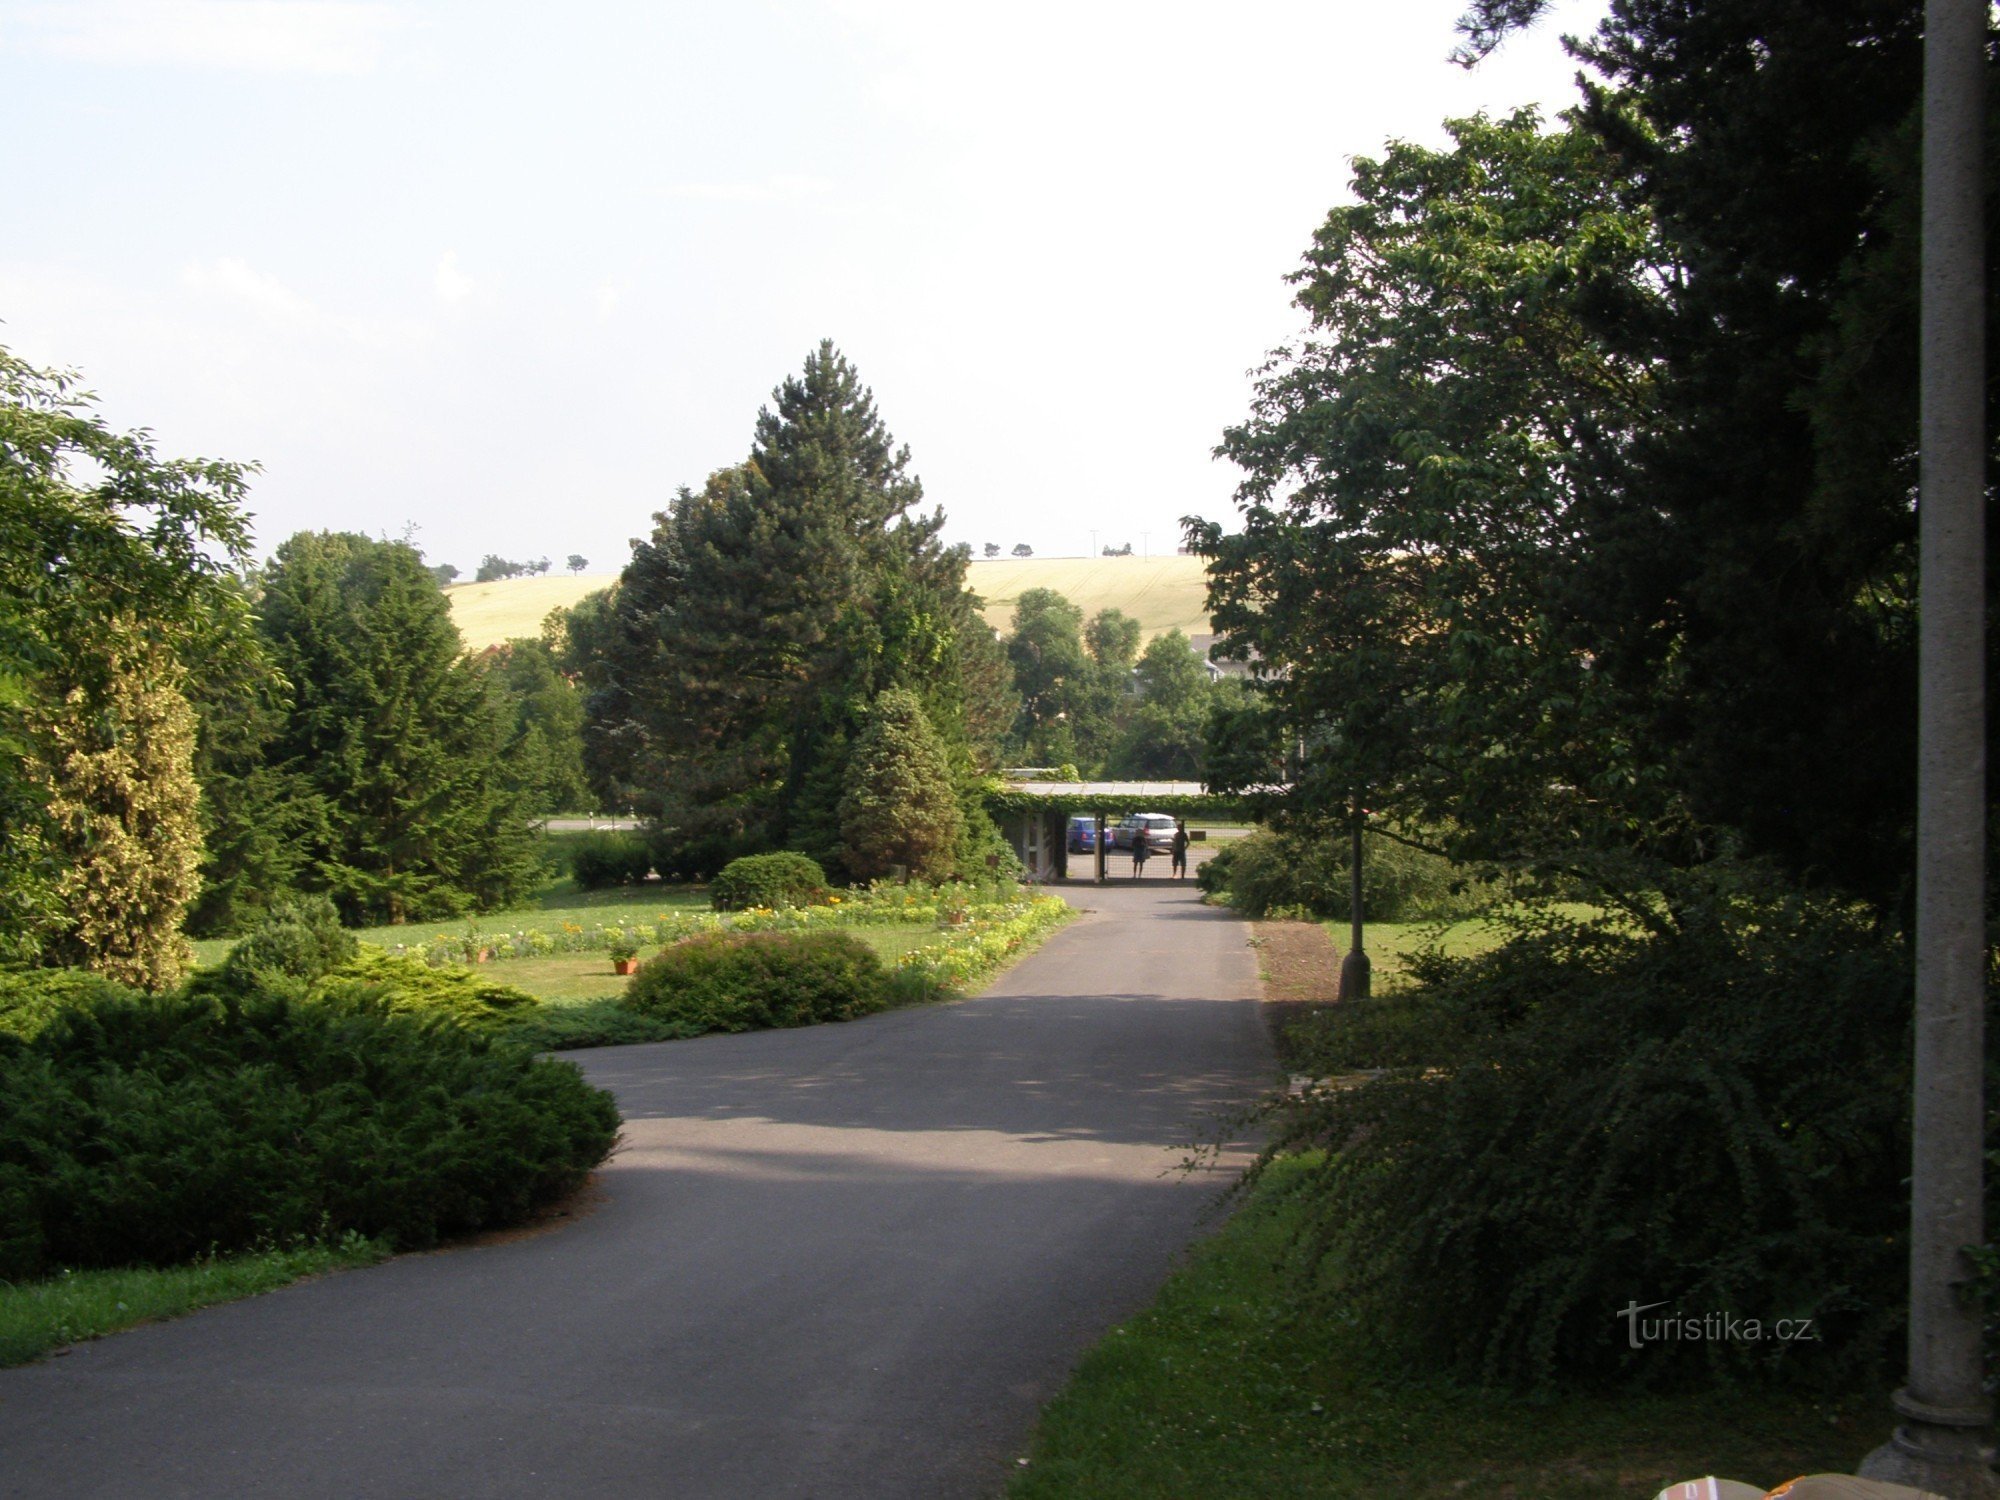 Arboretum Nový Dvůr near Opava